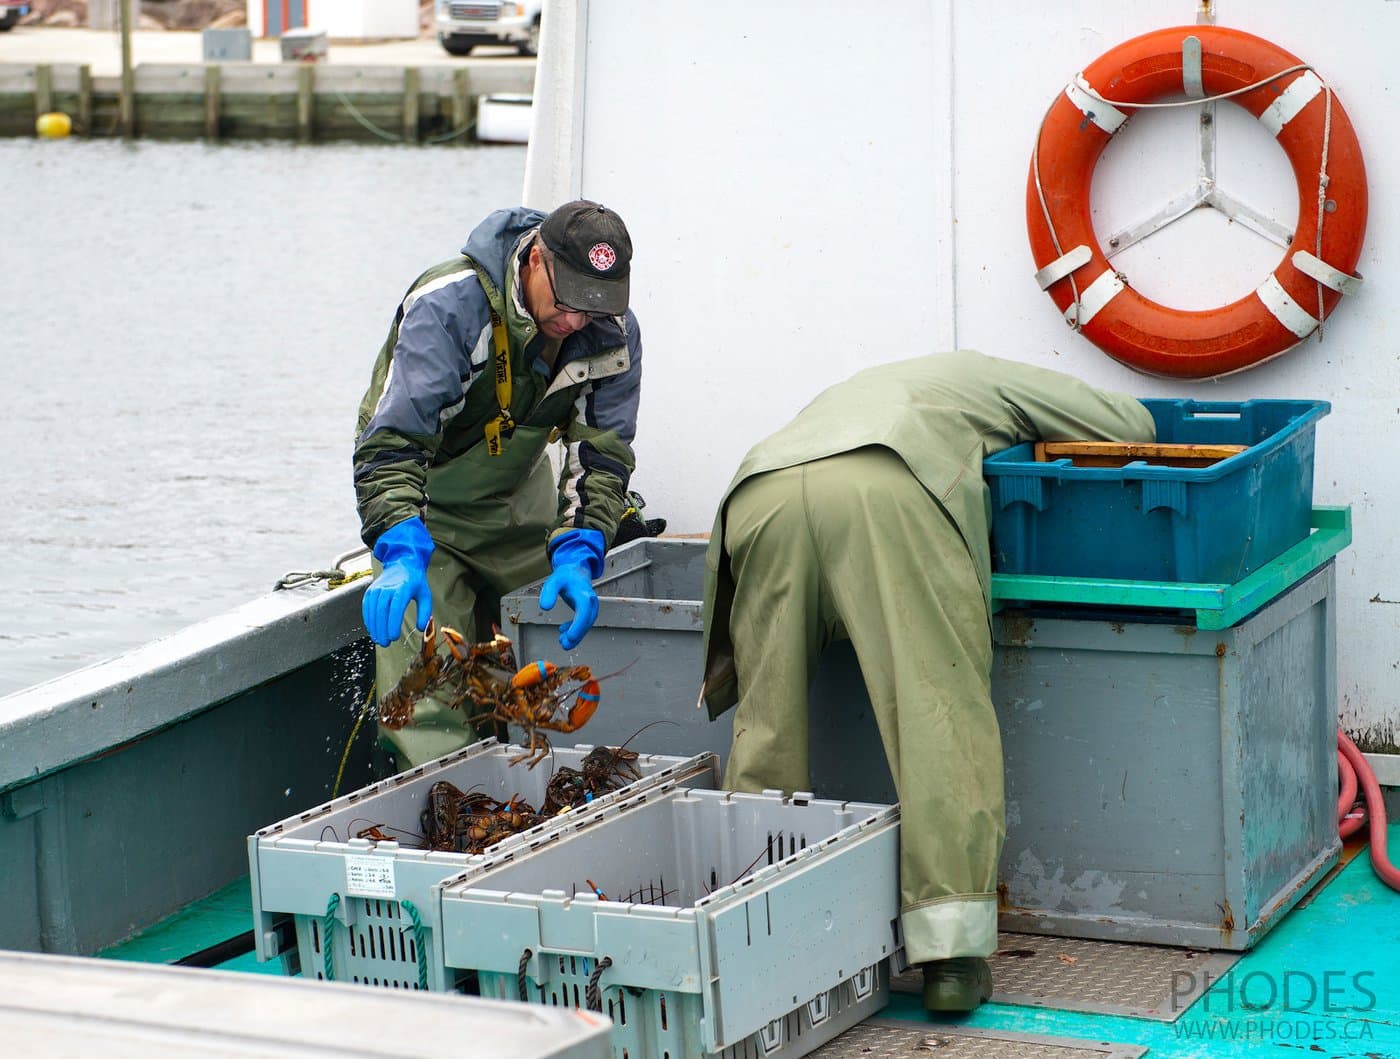 Lobster fishermen on Cape Breton Island in Nova Scotia